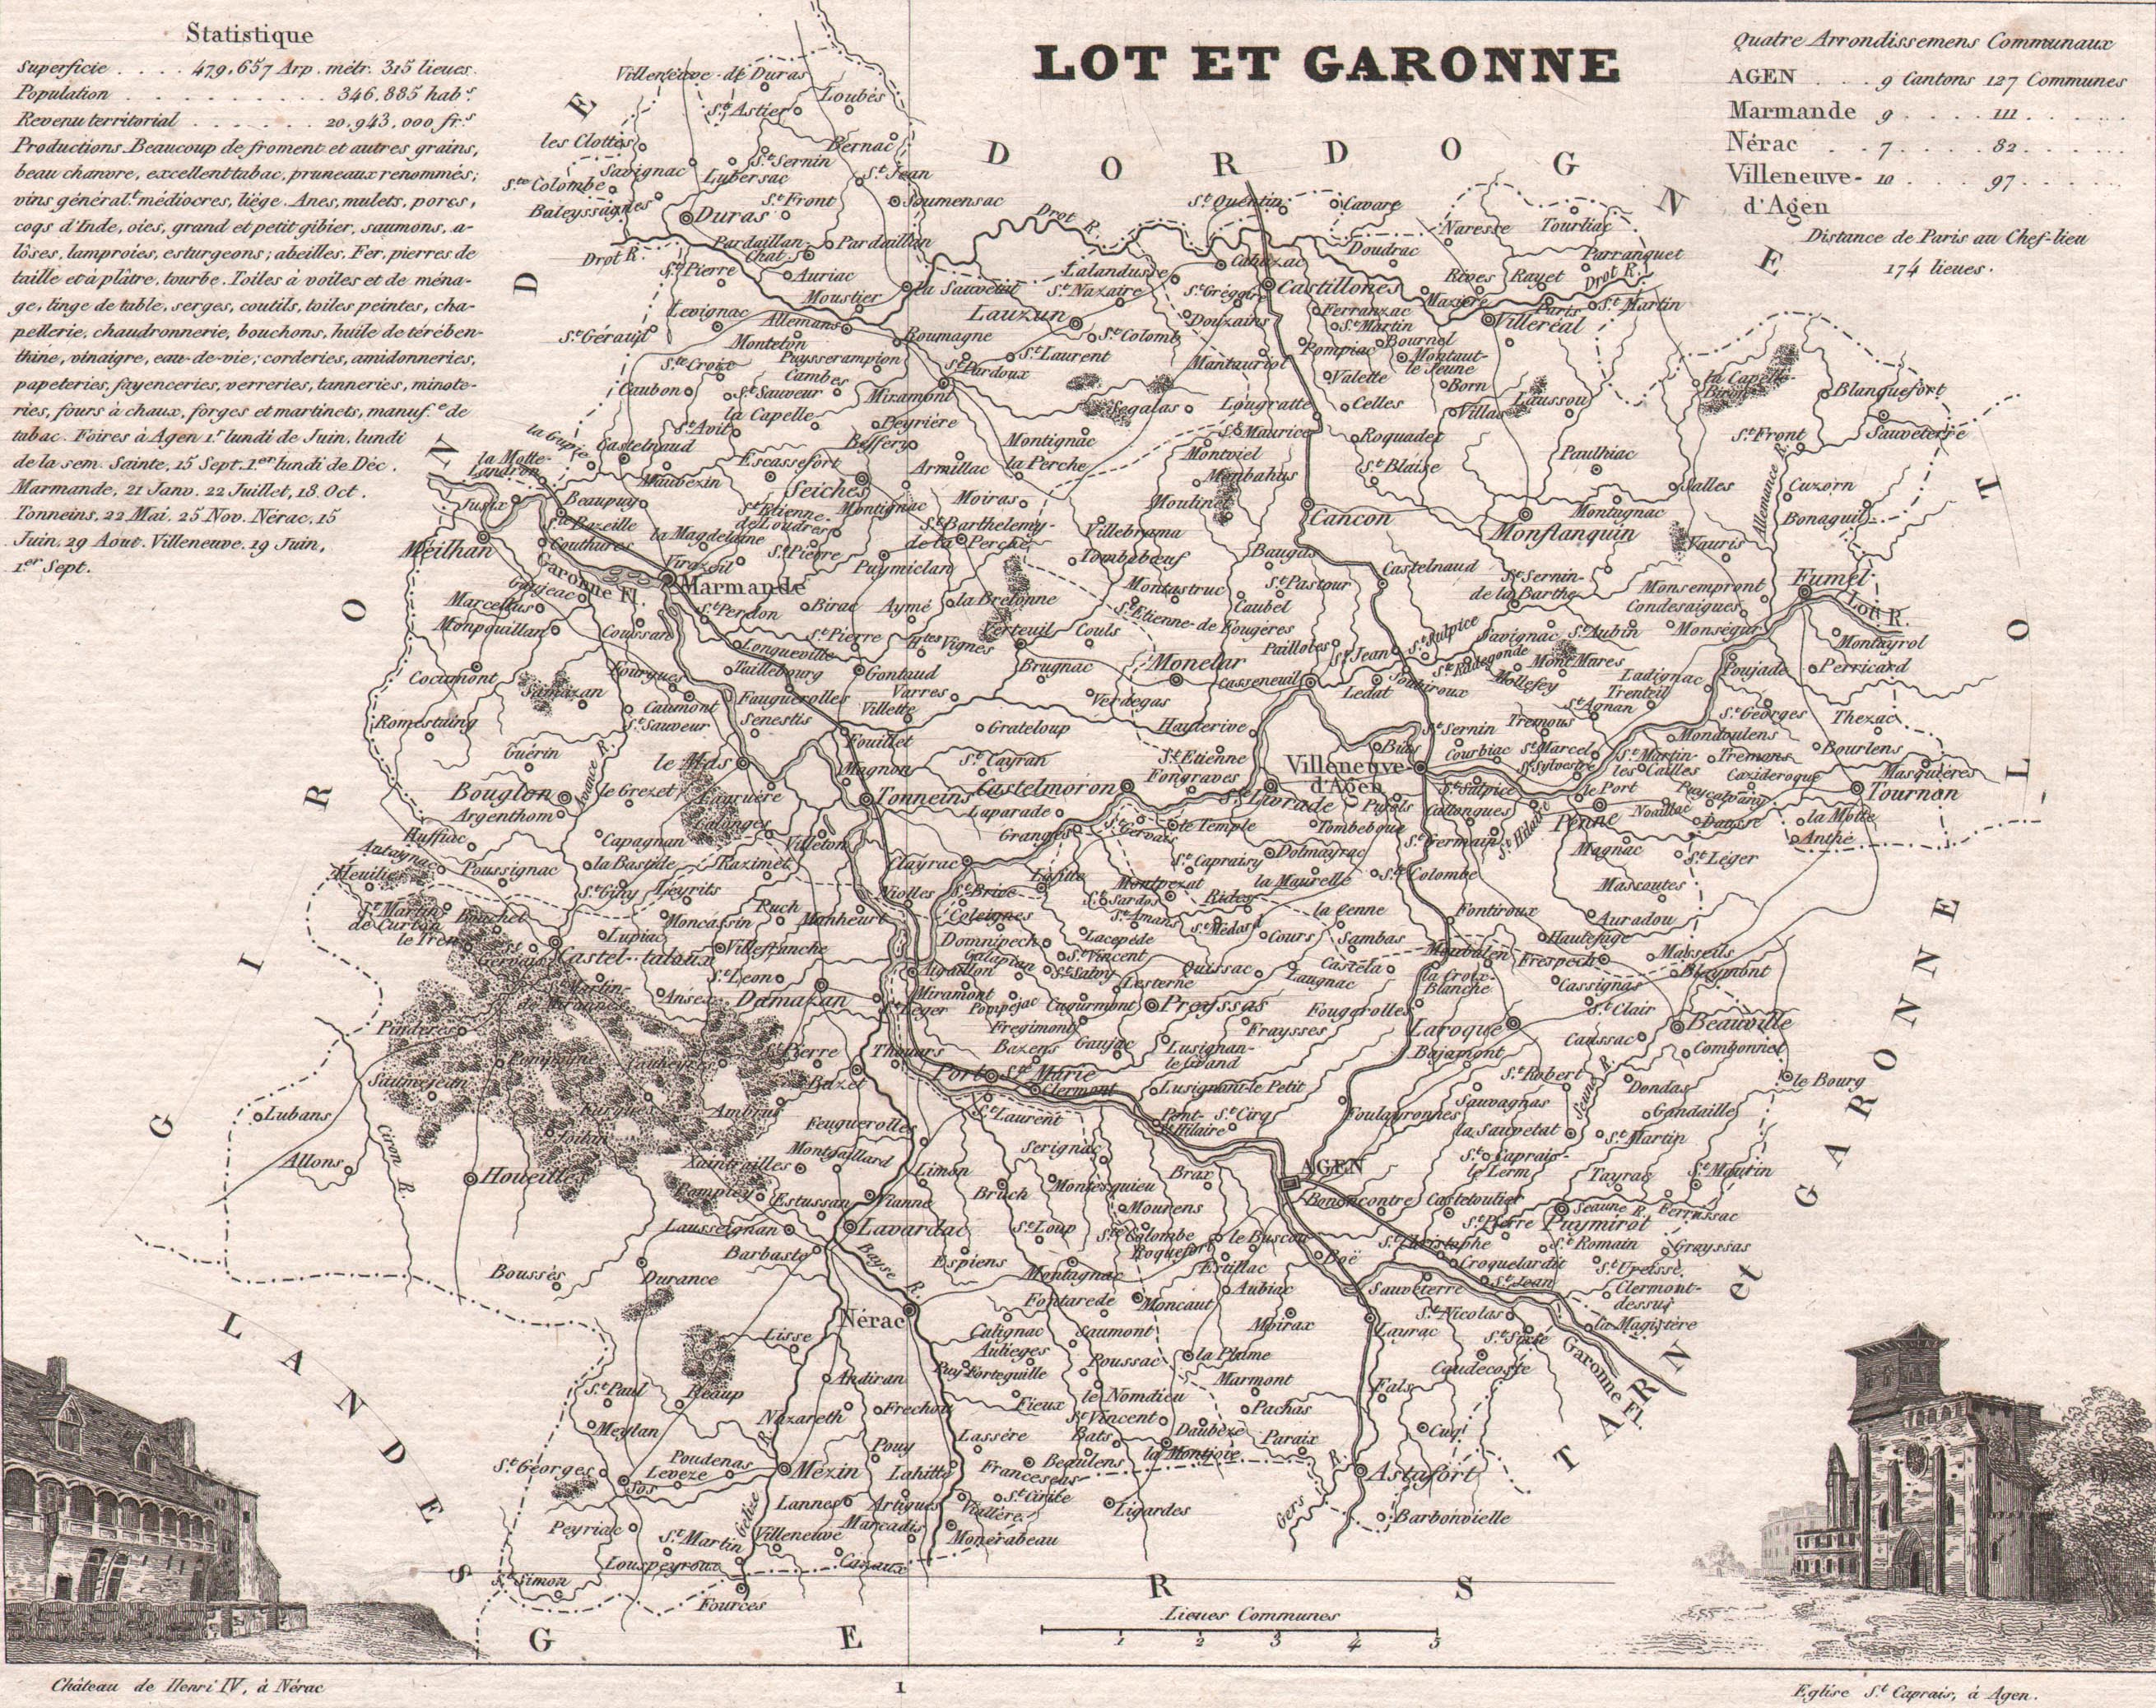 47 - Lot et Garonne